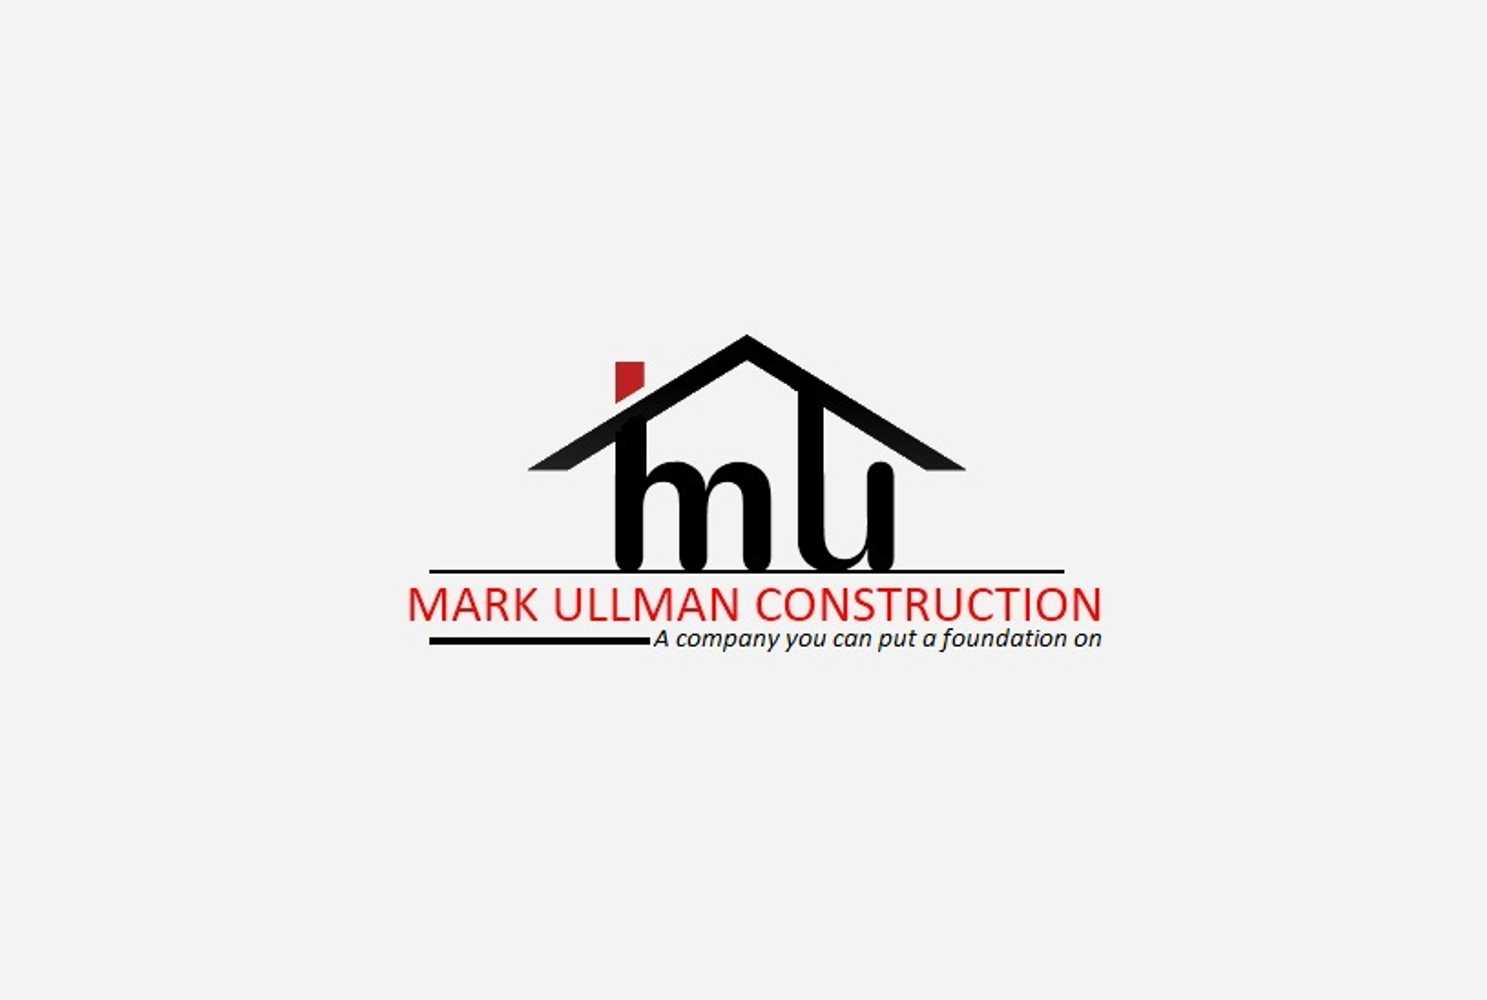 Mark Ullman Construction